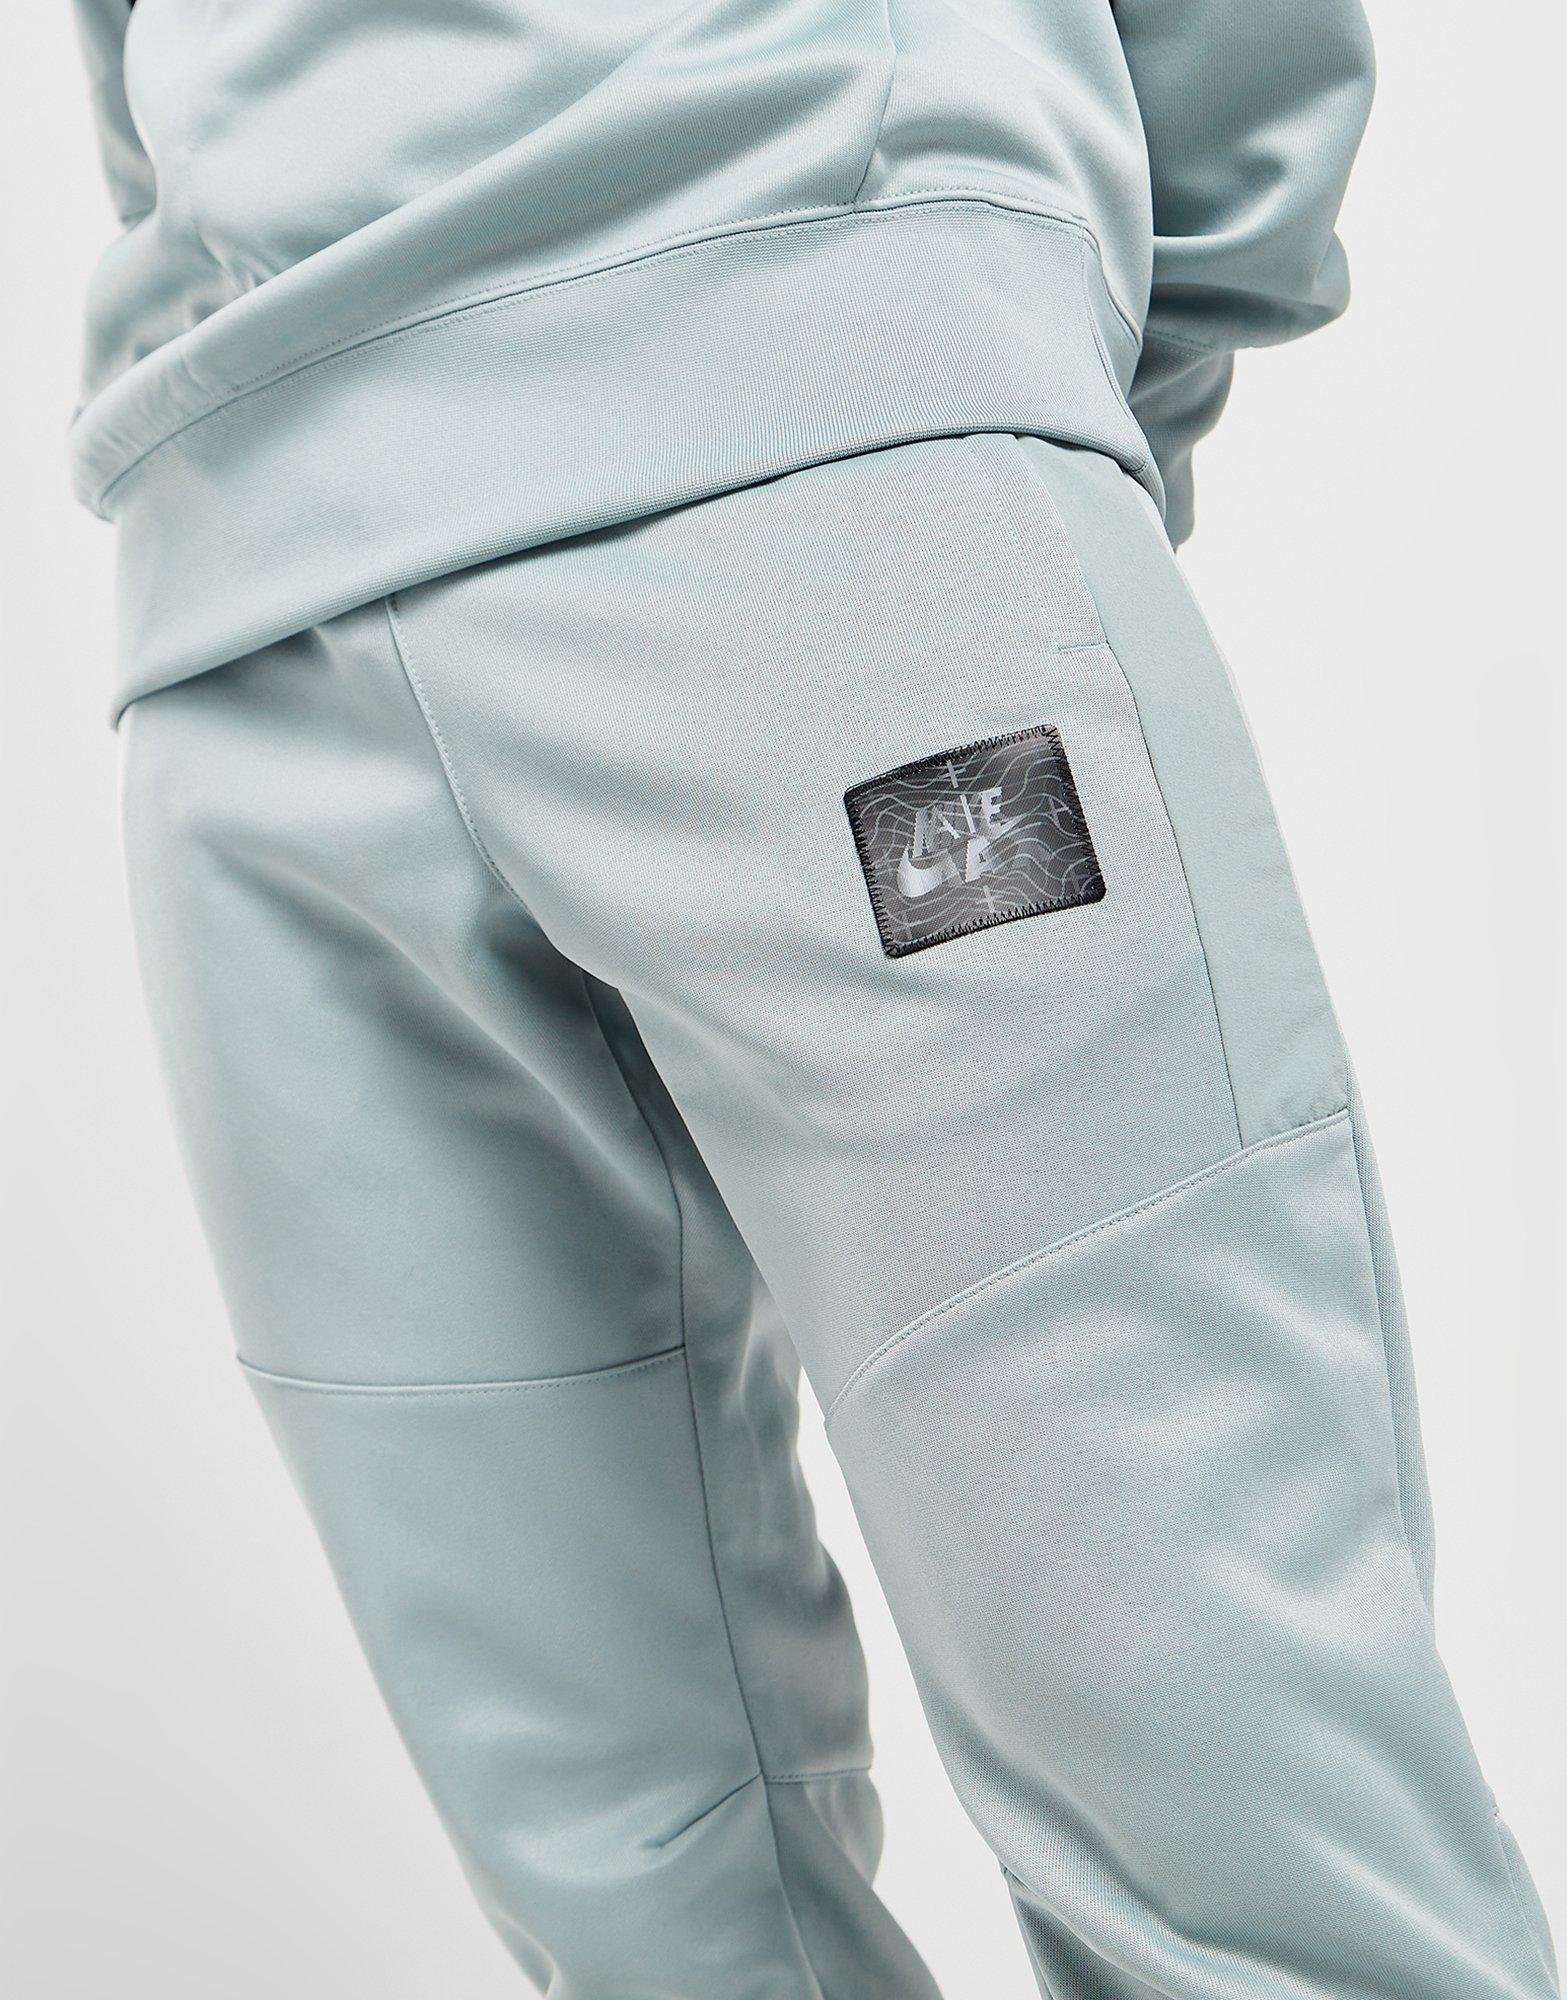 Nike Pantalon de survêtement Air Max Sportswear Homme Noir- JD Sports France